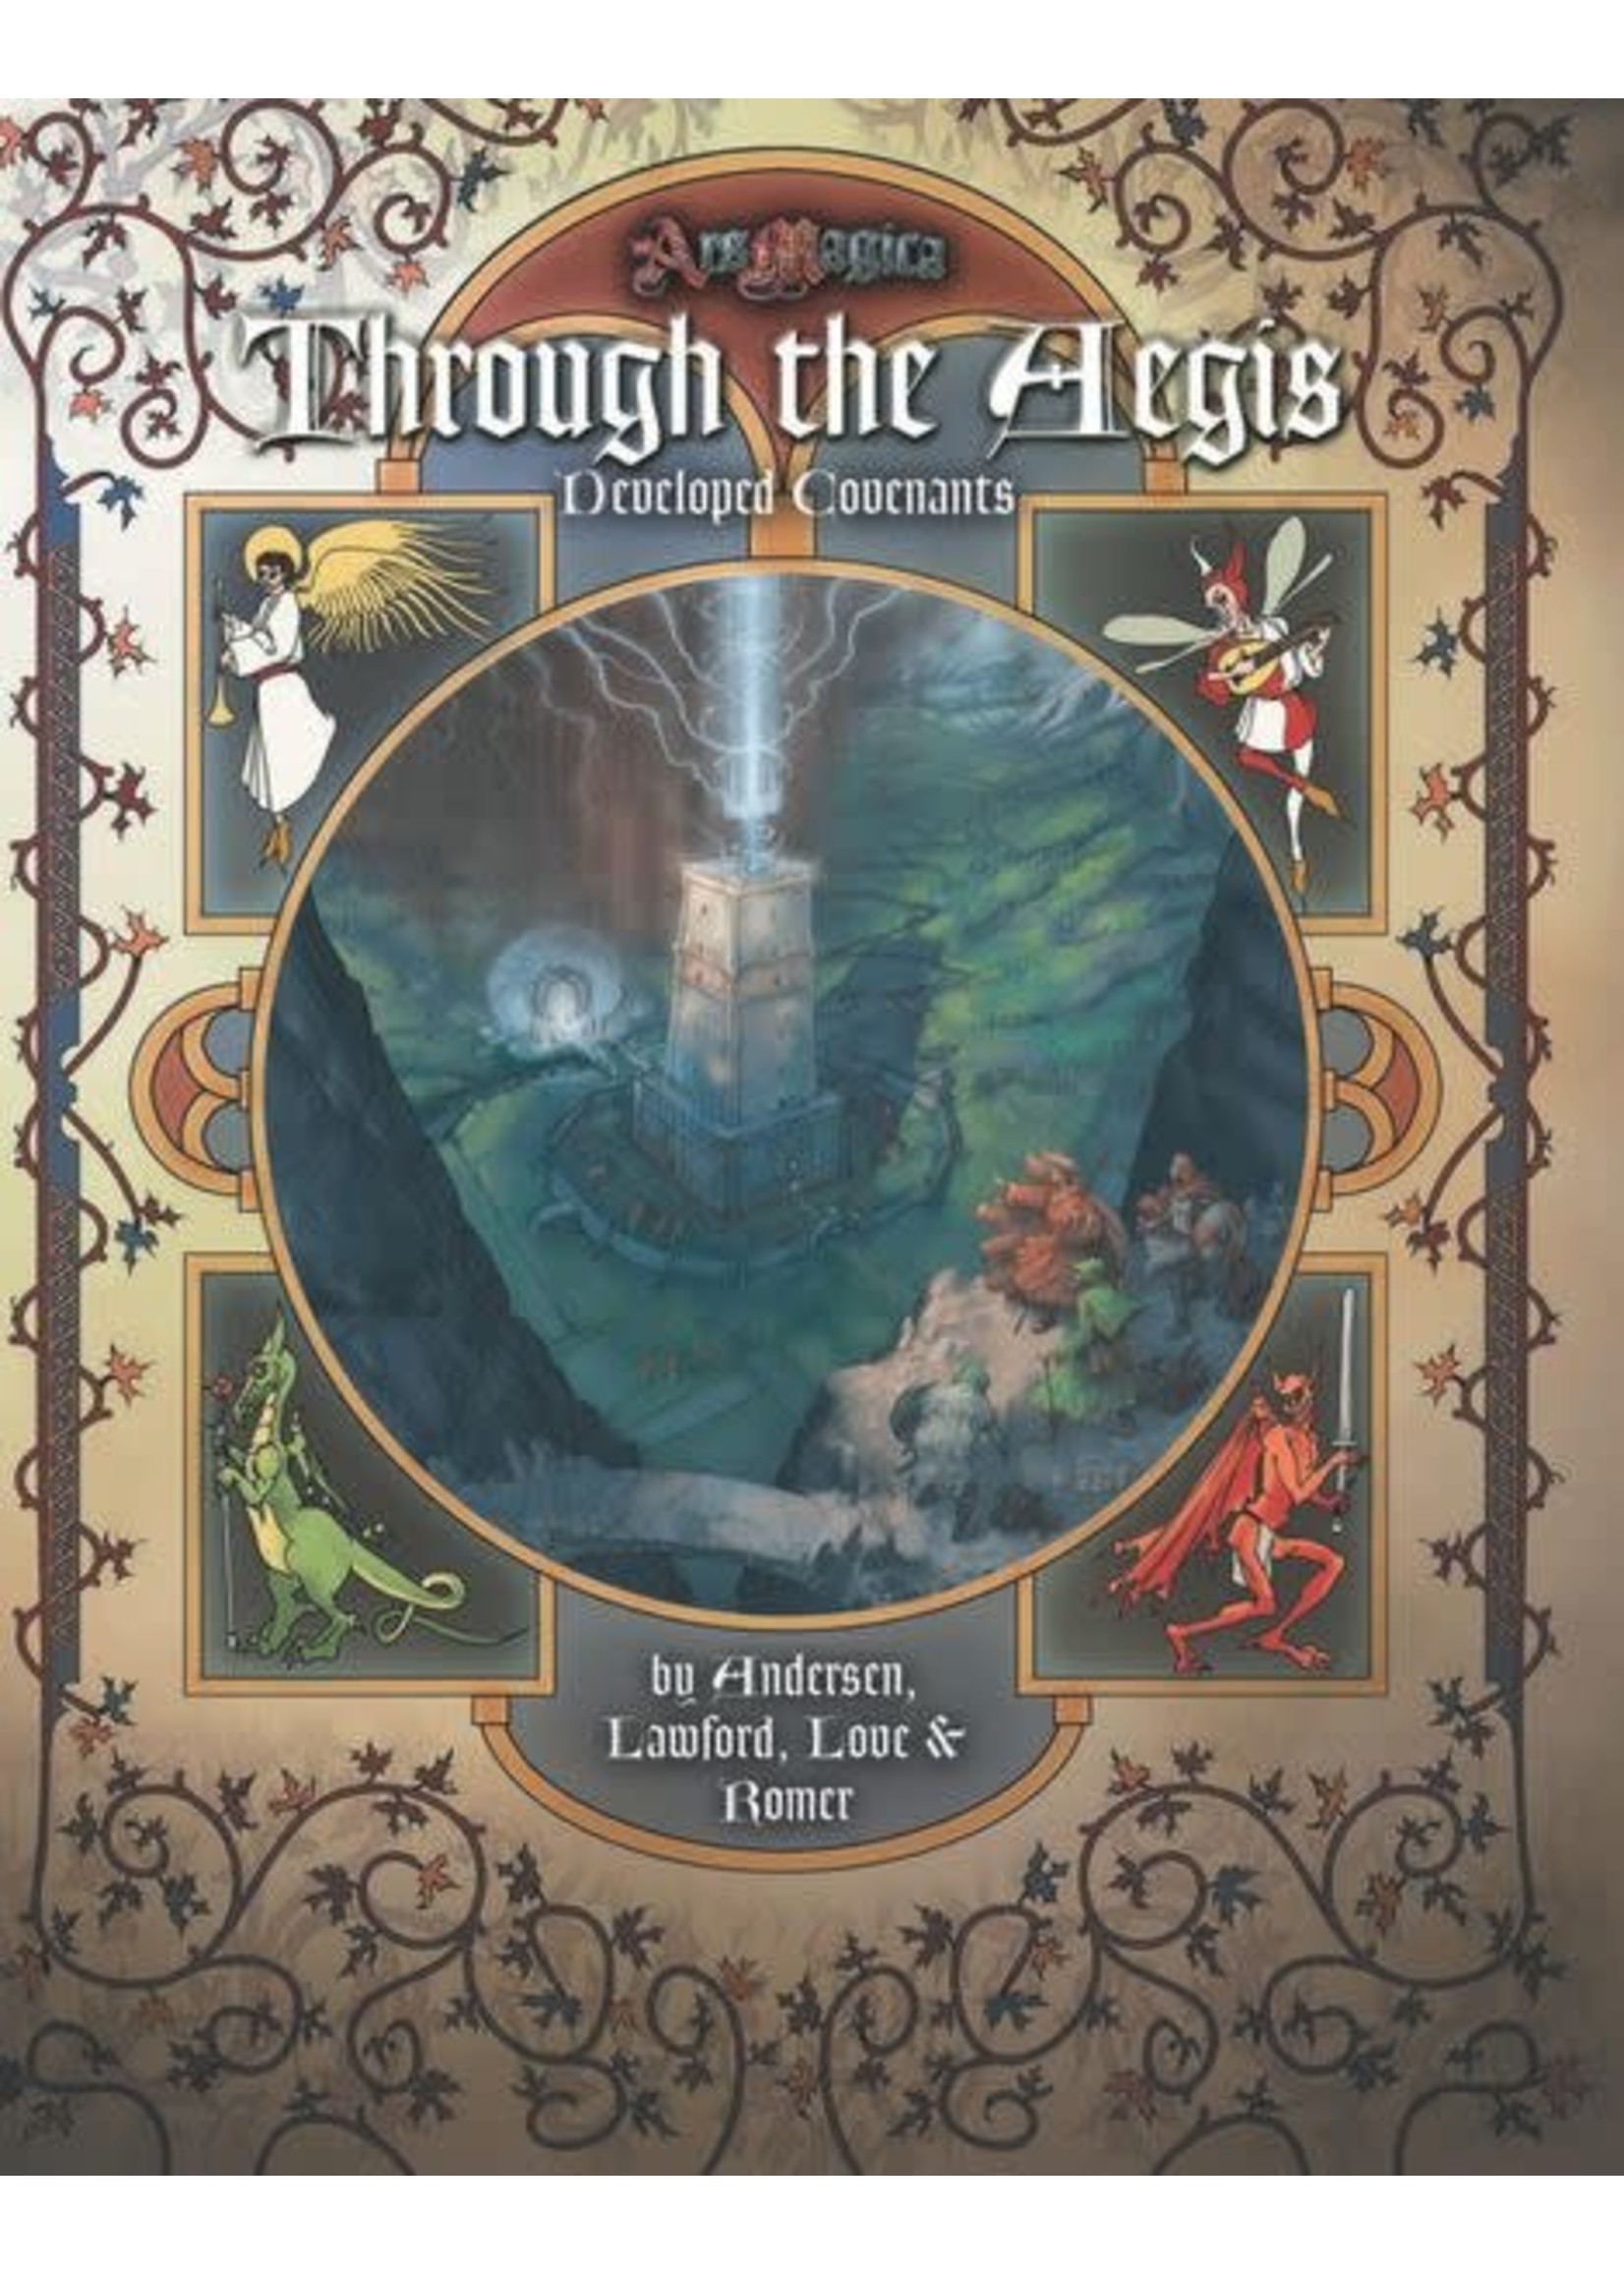 Atlas Games Ars Magica 5E: Through the Aegis - Developed Covenants